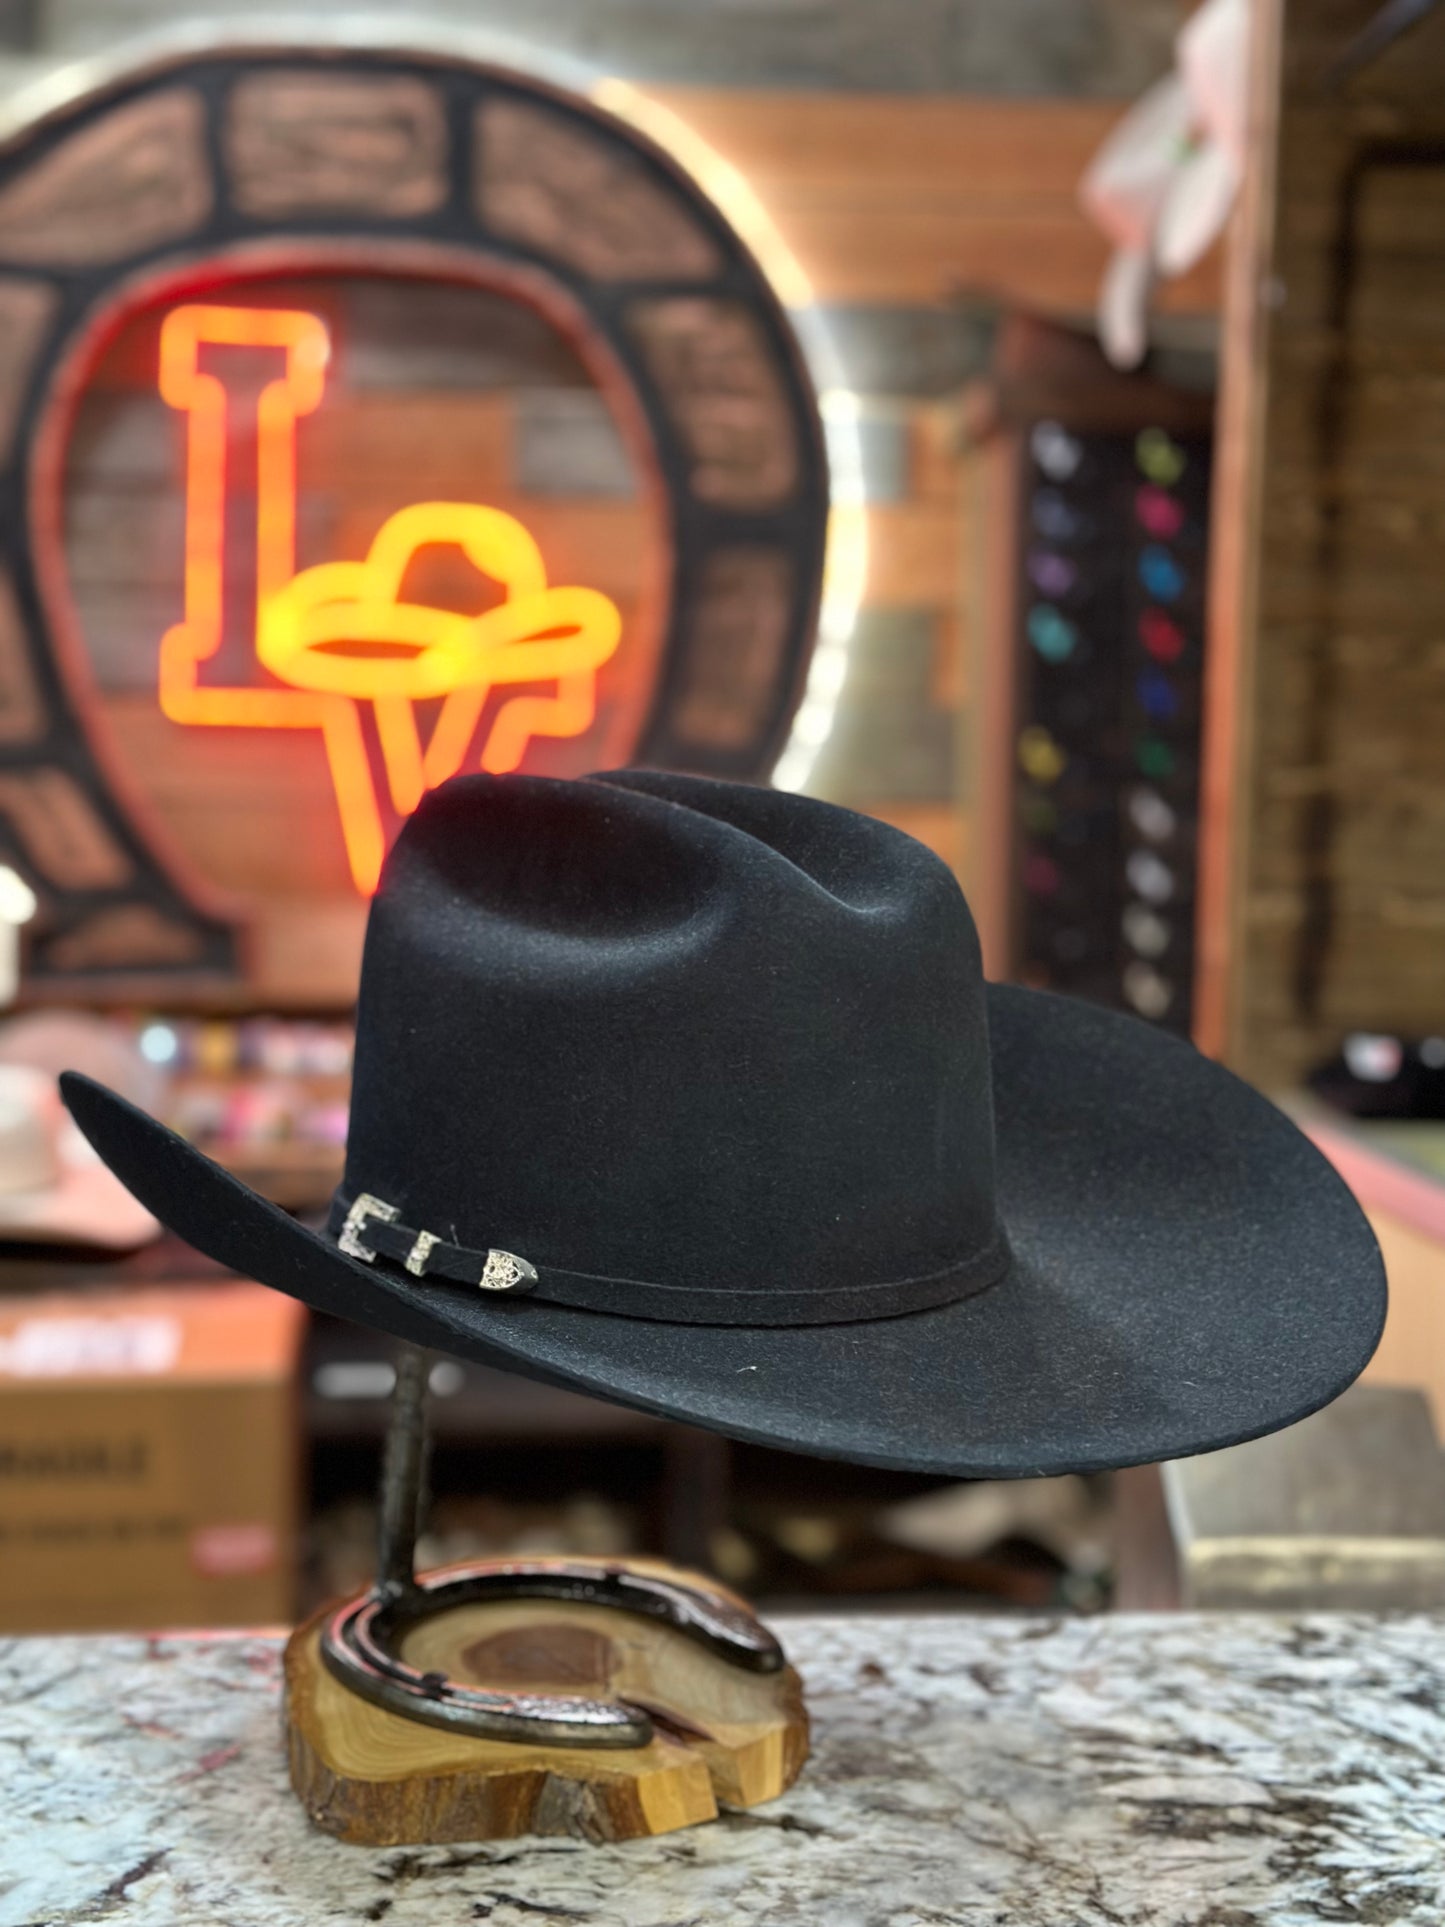 Stetson 6x Monarca Cowboy Felt Hat Black